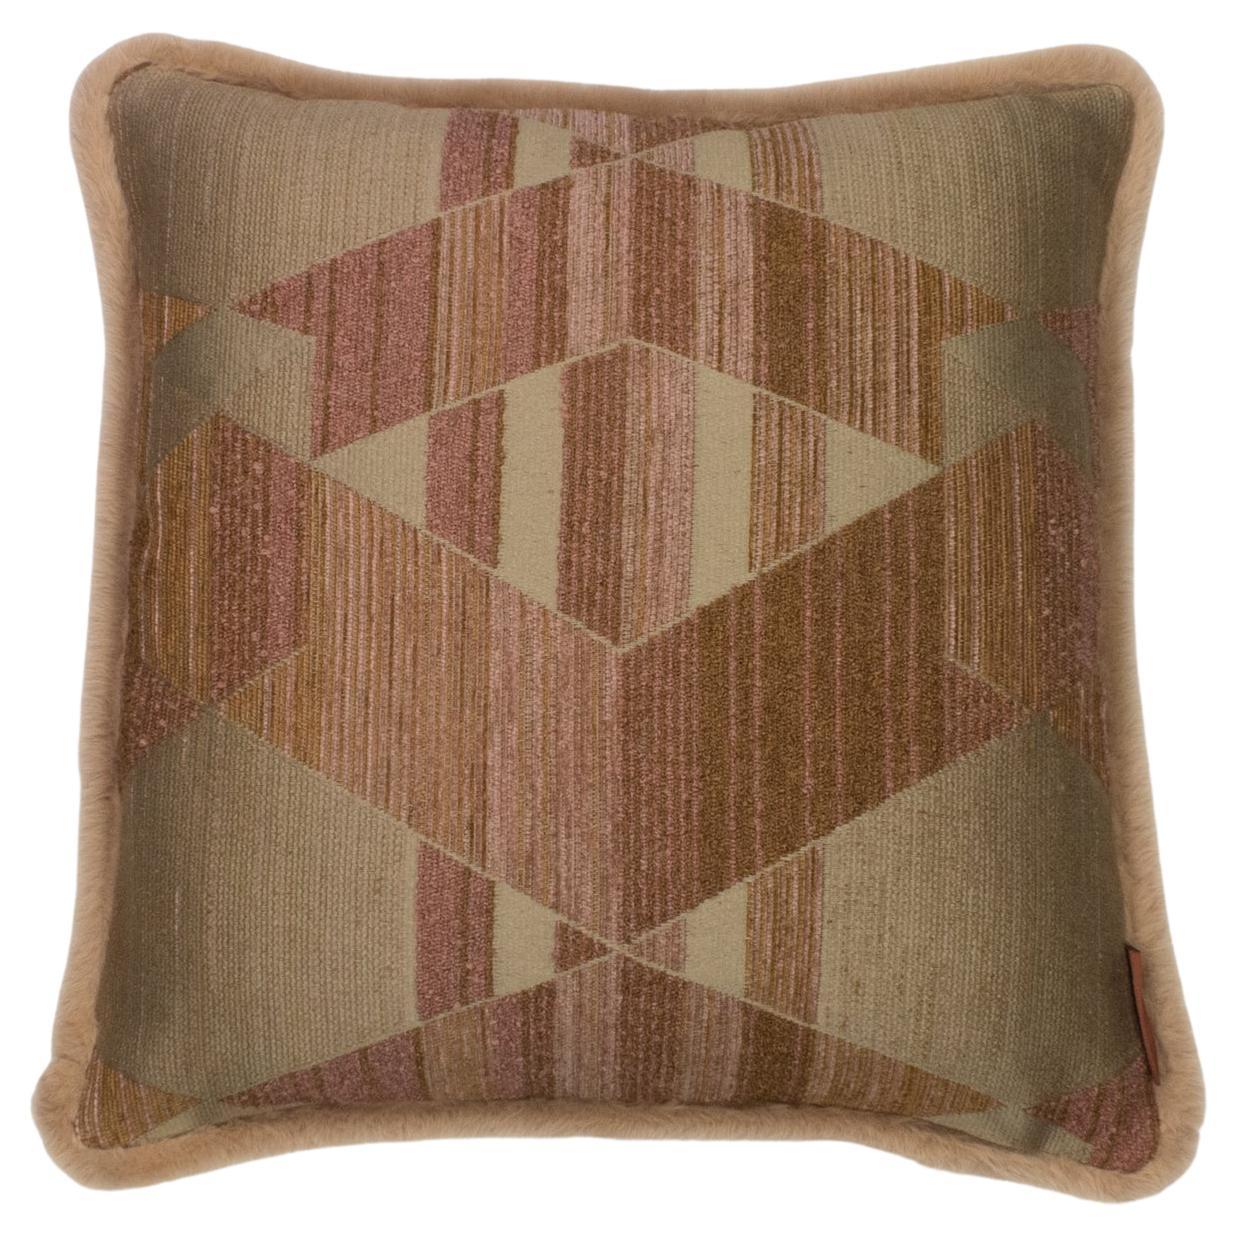 Cushion / Pillow Pattern Supreme Coup De Foudre Rose by Evoution21 For Sale